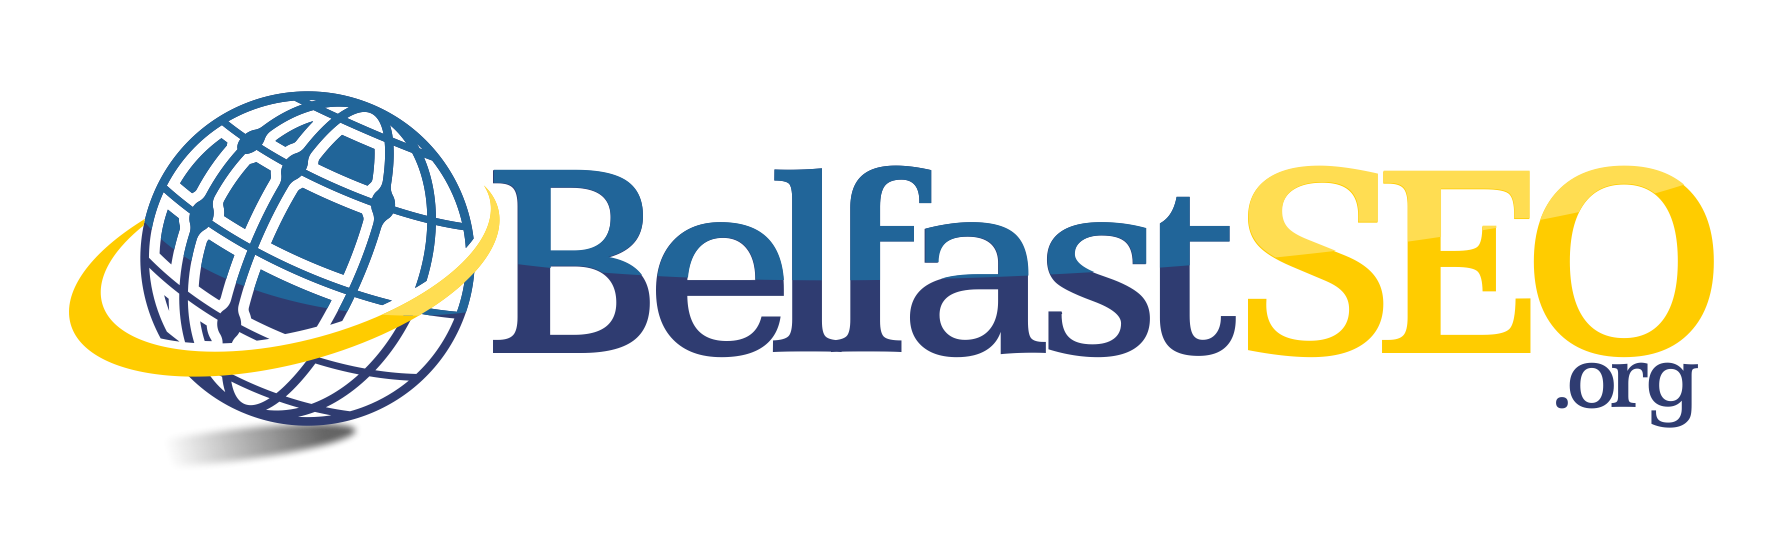 Belfast SEO Experts logo